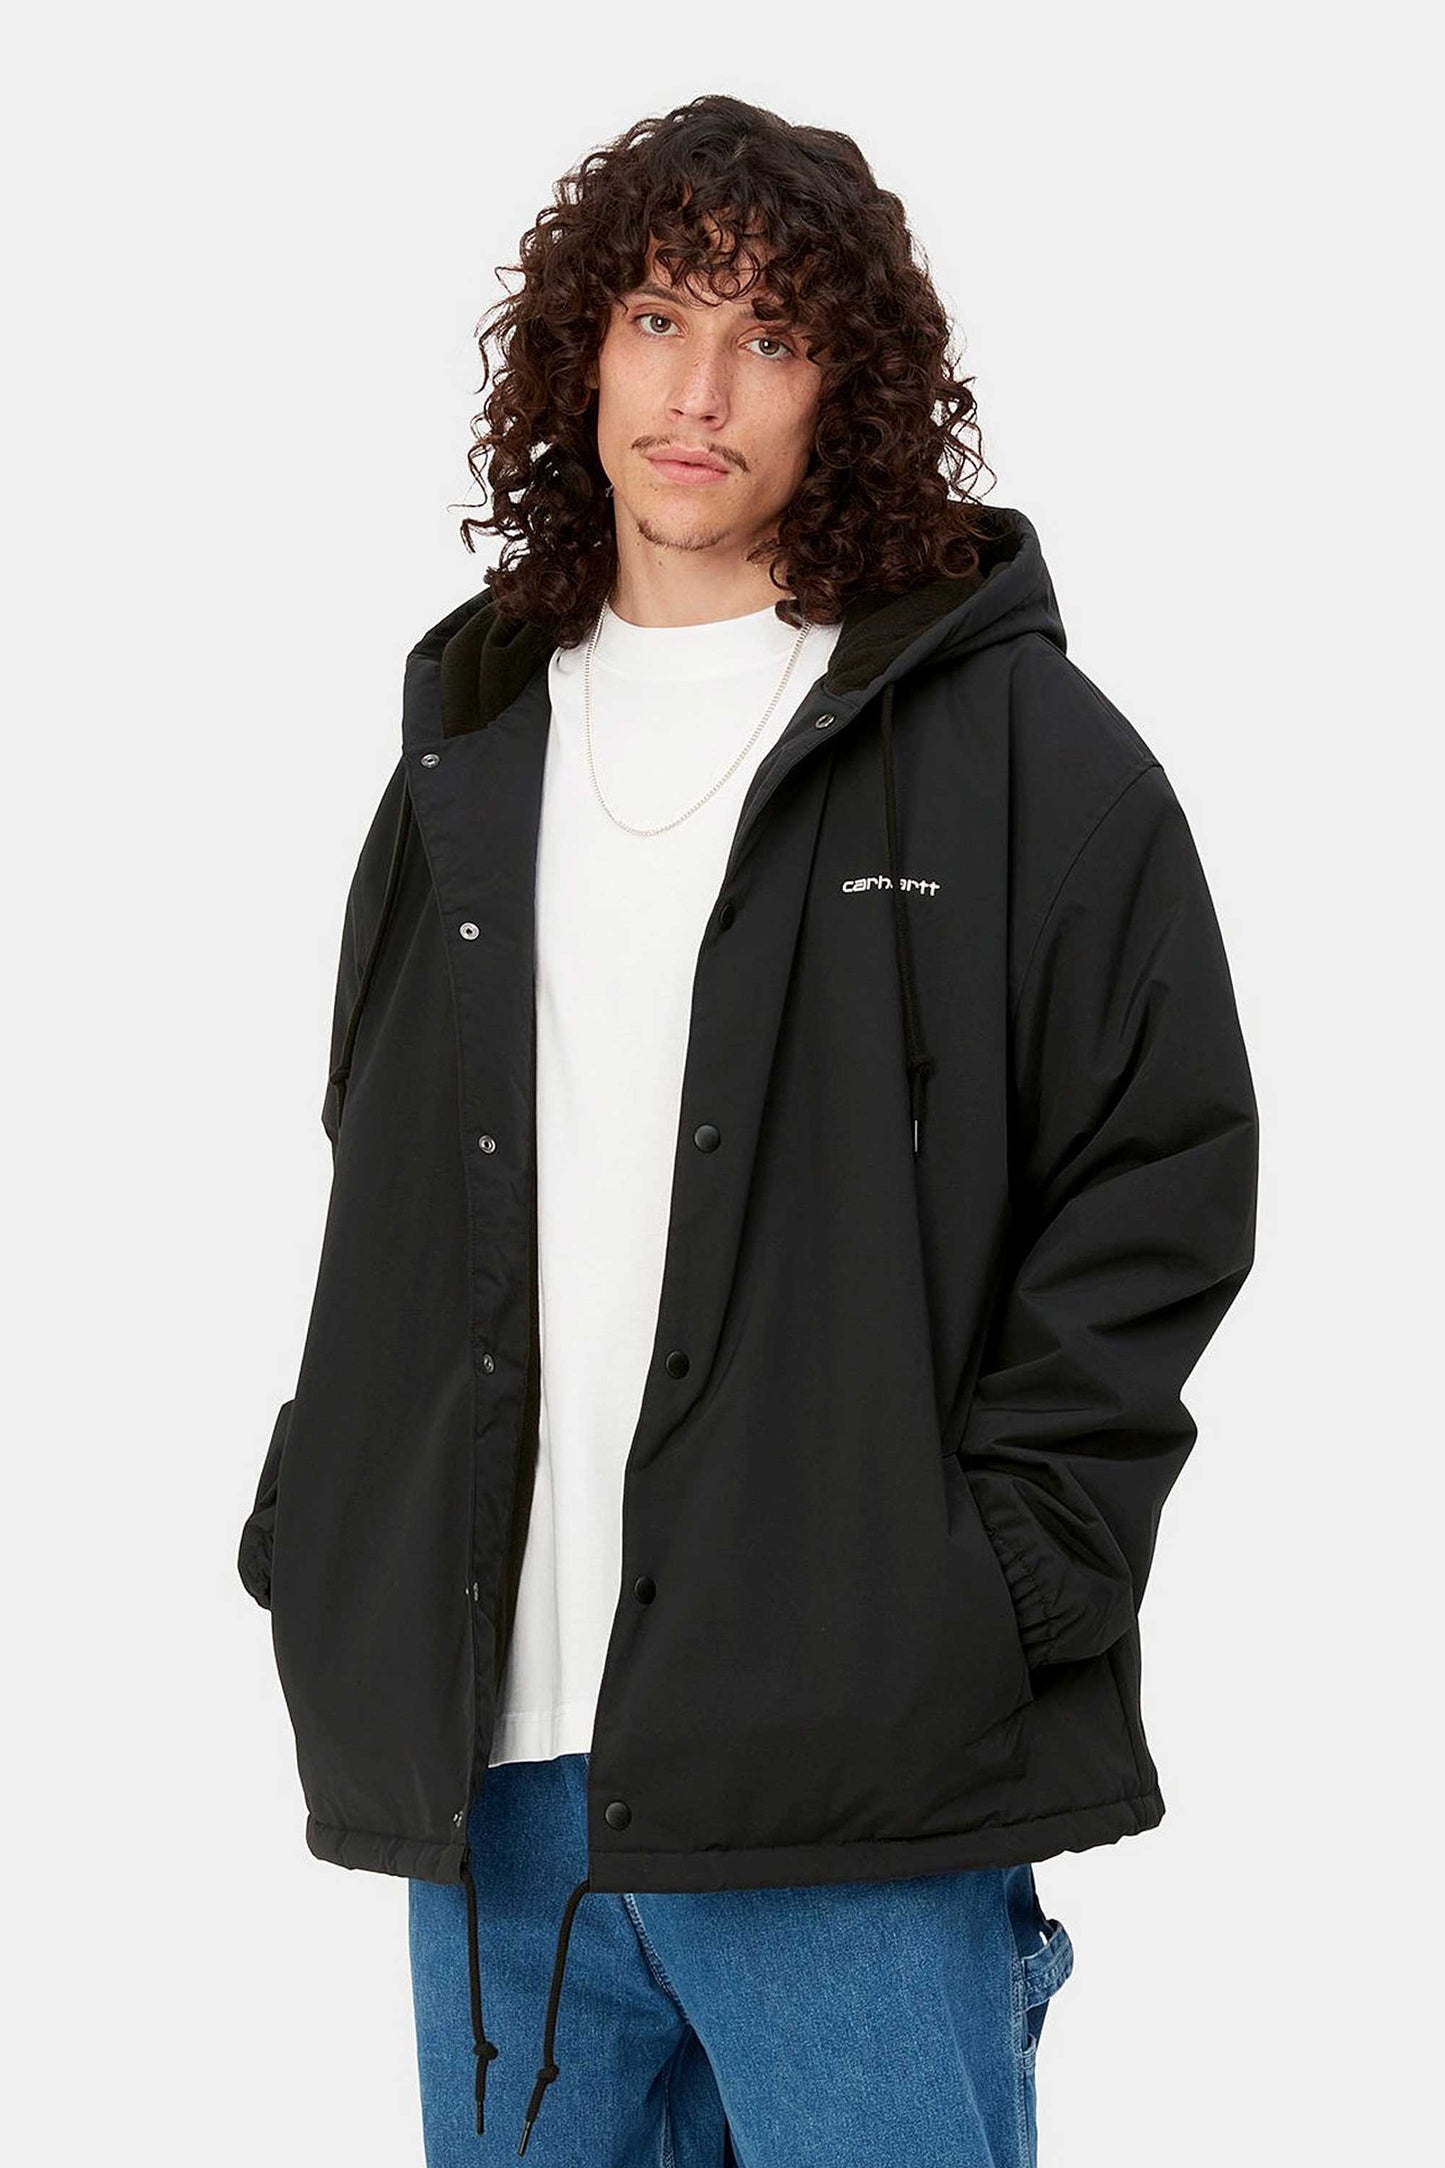 Pukas-Surf-Shop-carharrt-jacket-hooded-coach-black